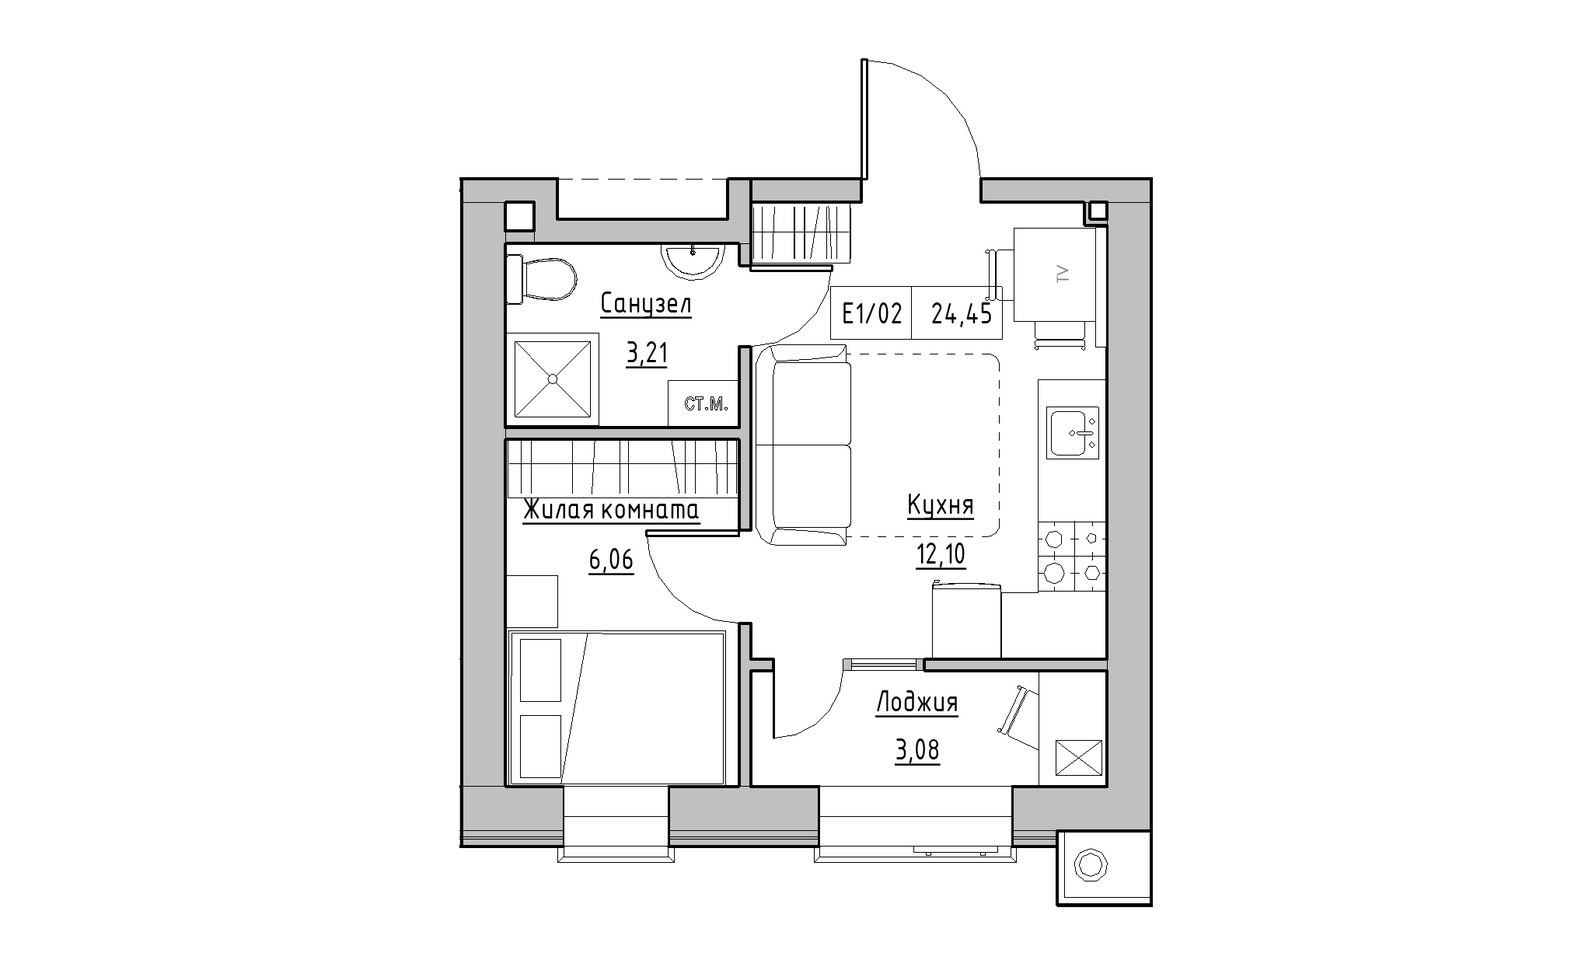 Planning 1-rm flats area 24.45m2, KS-014-05/0002.